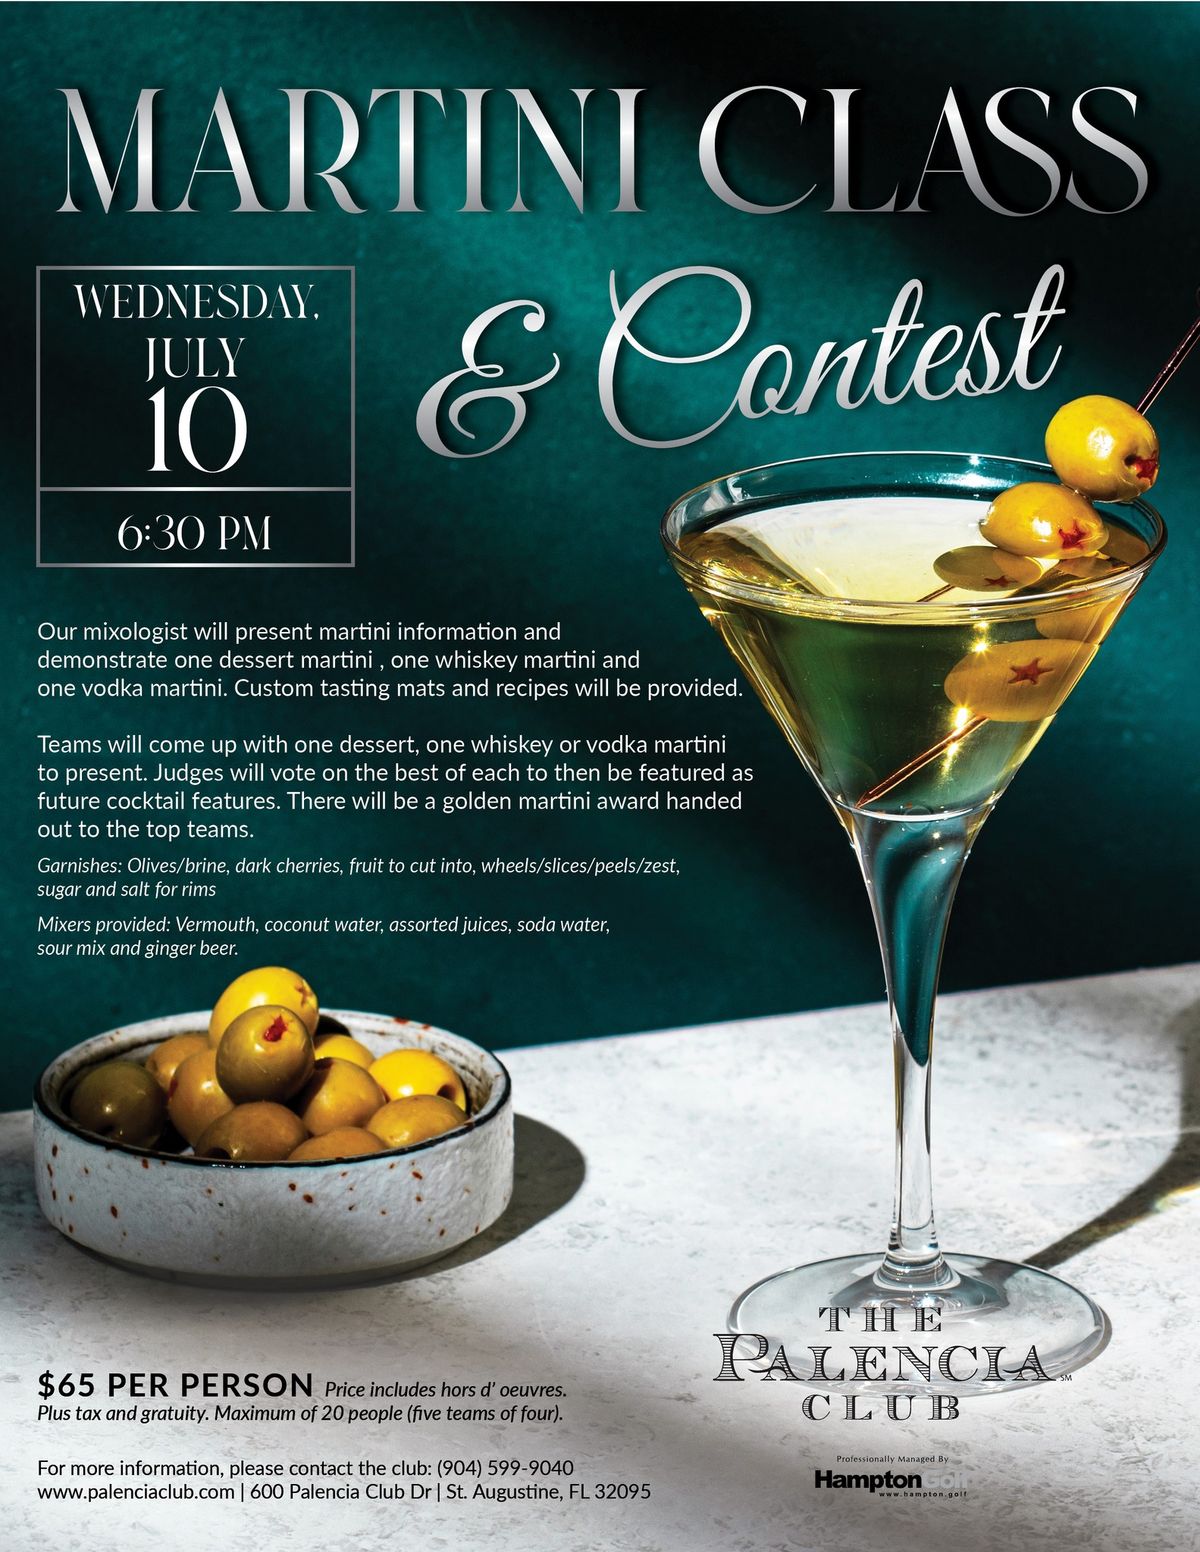 Martini Class & Contest - WAITLIST (Member Event)